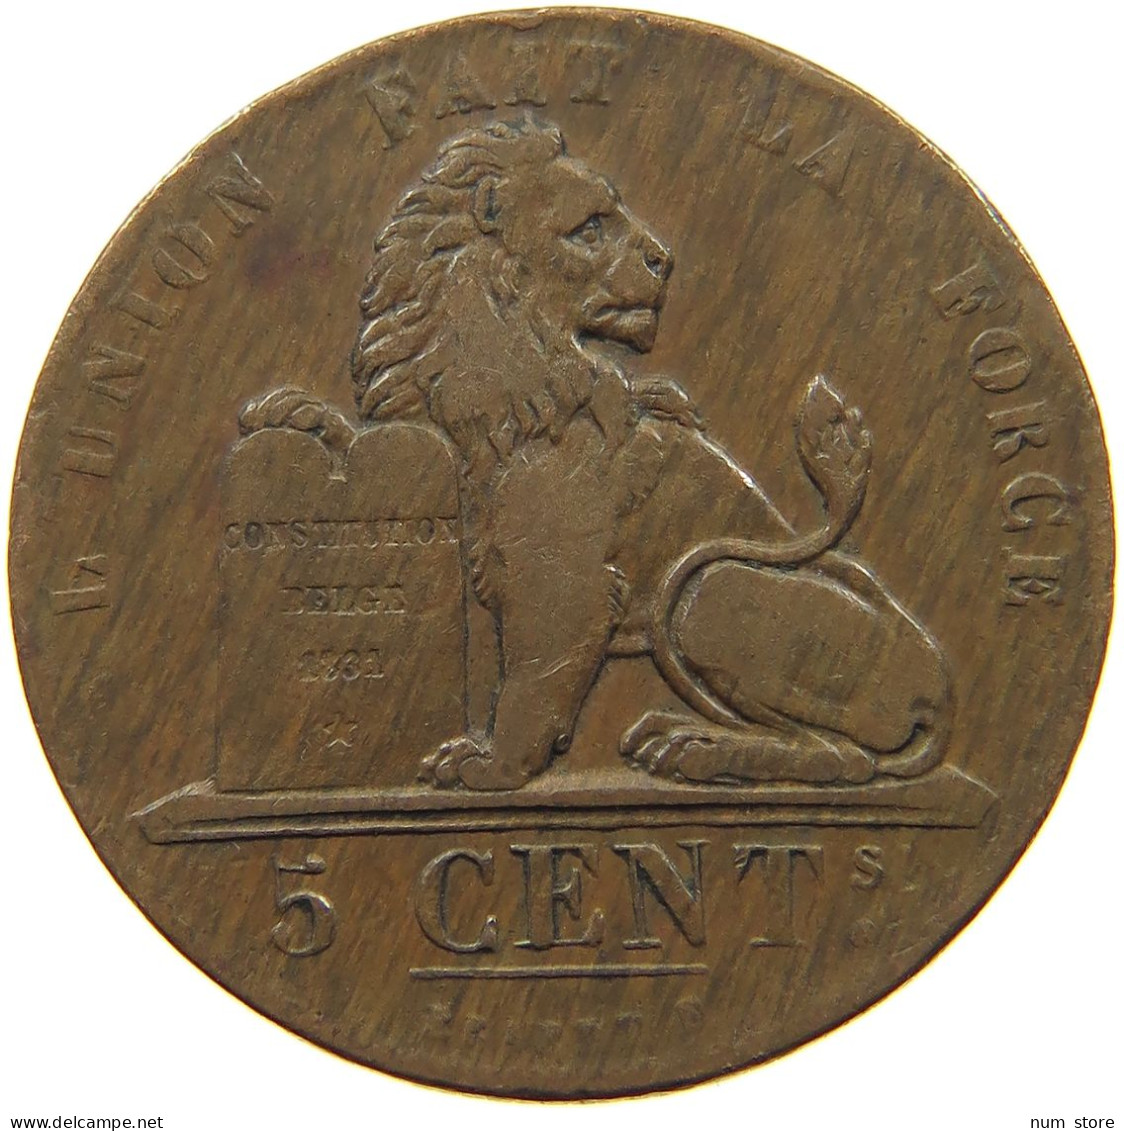 BELGIUM 5 CENTIMES 1837 LEOPOLD I. 1830-1865. #MA 021717 - 5 Cents